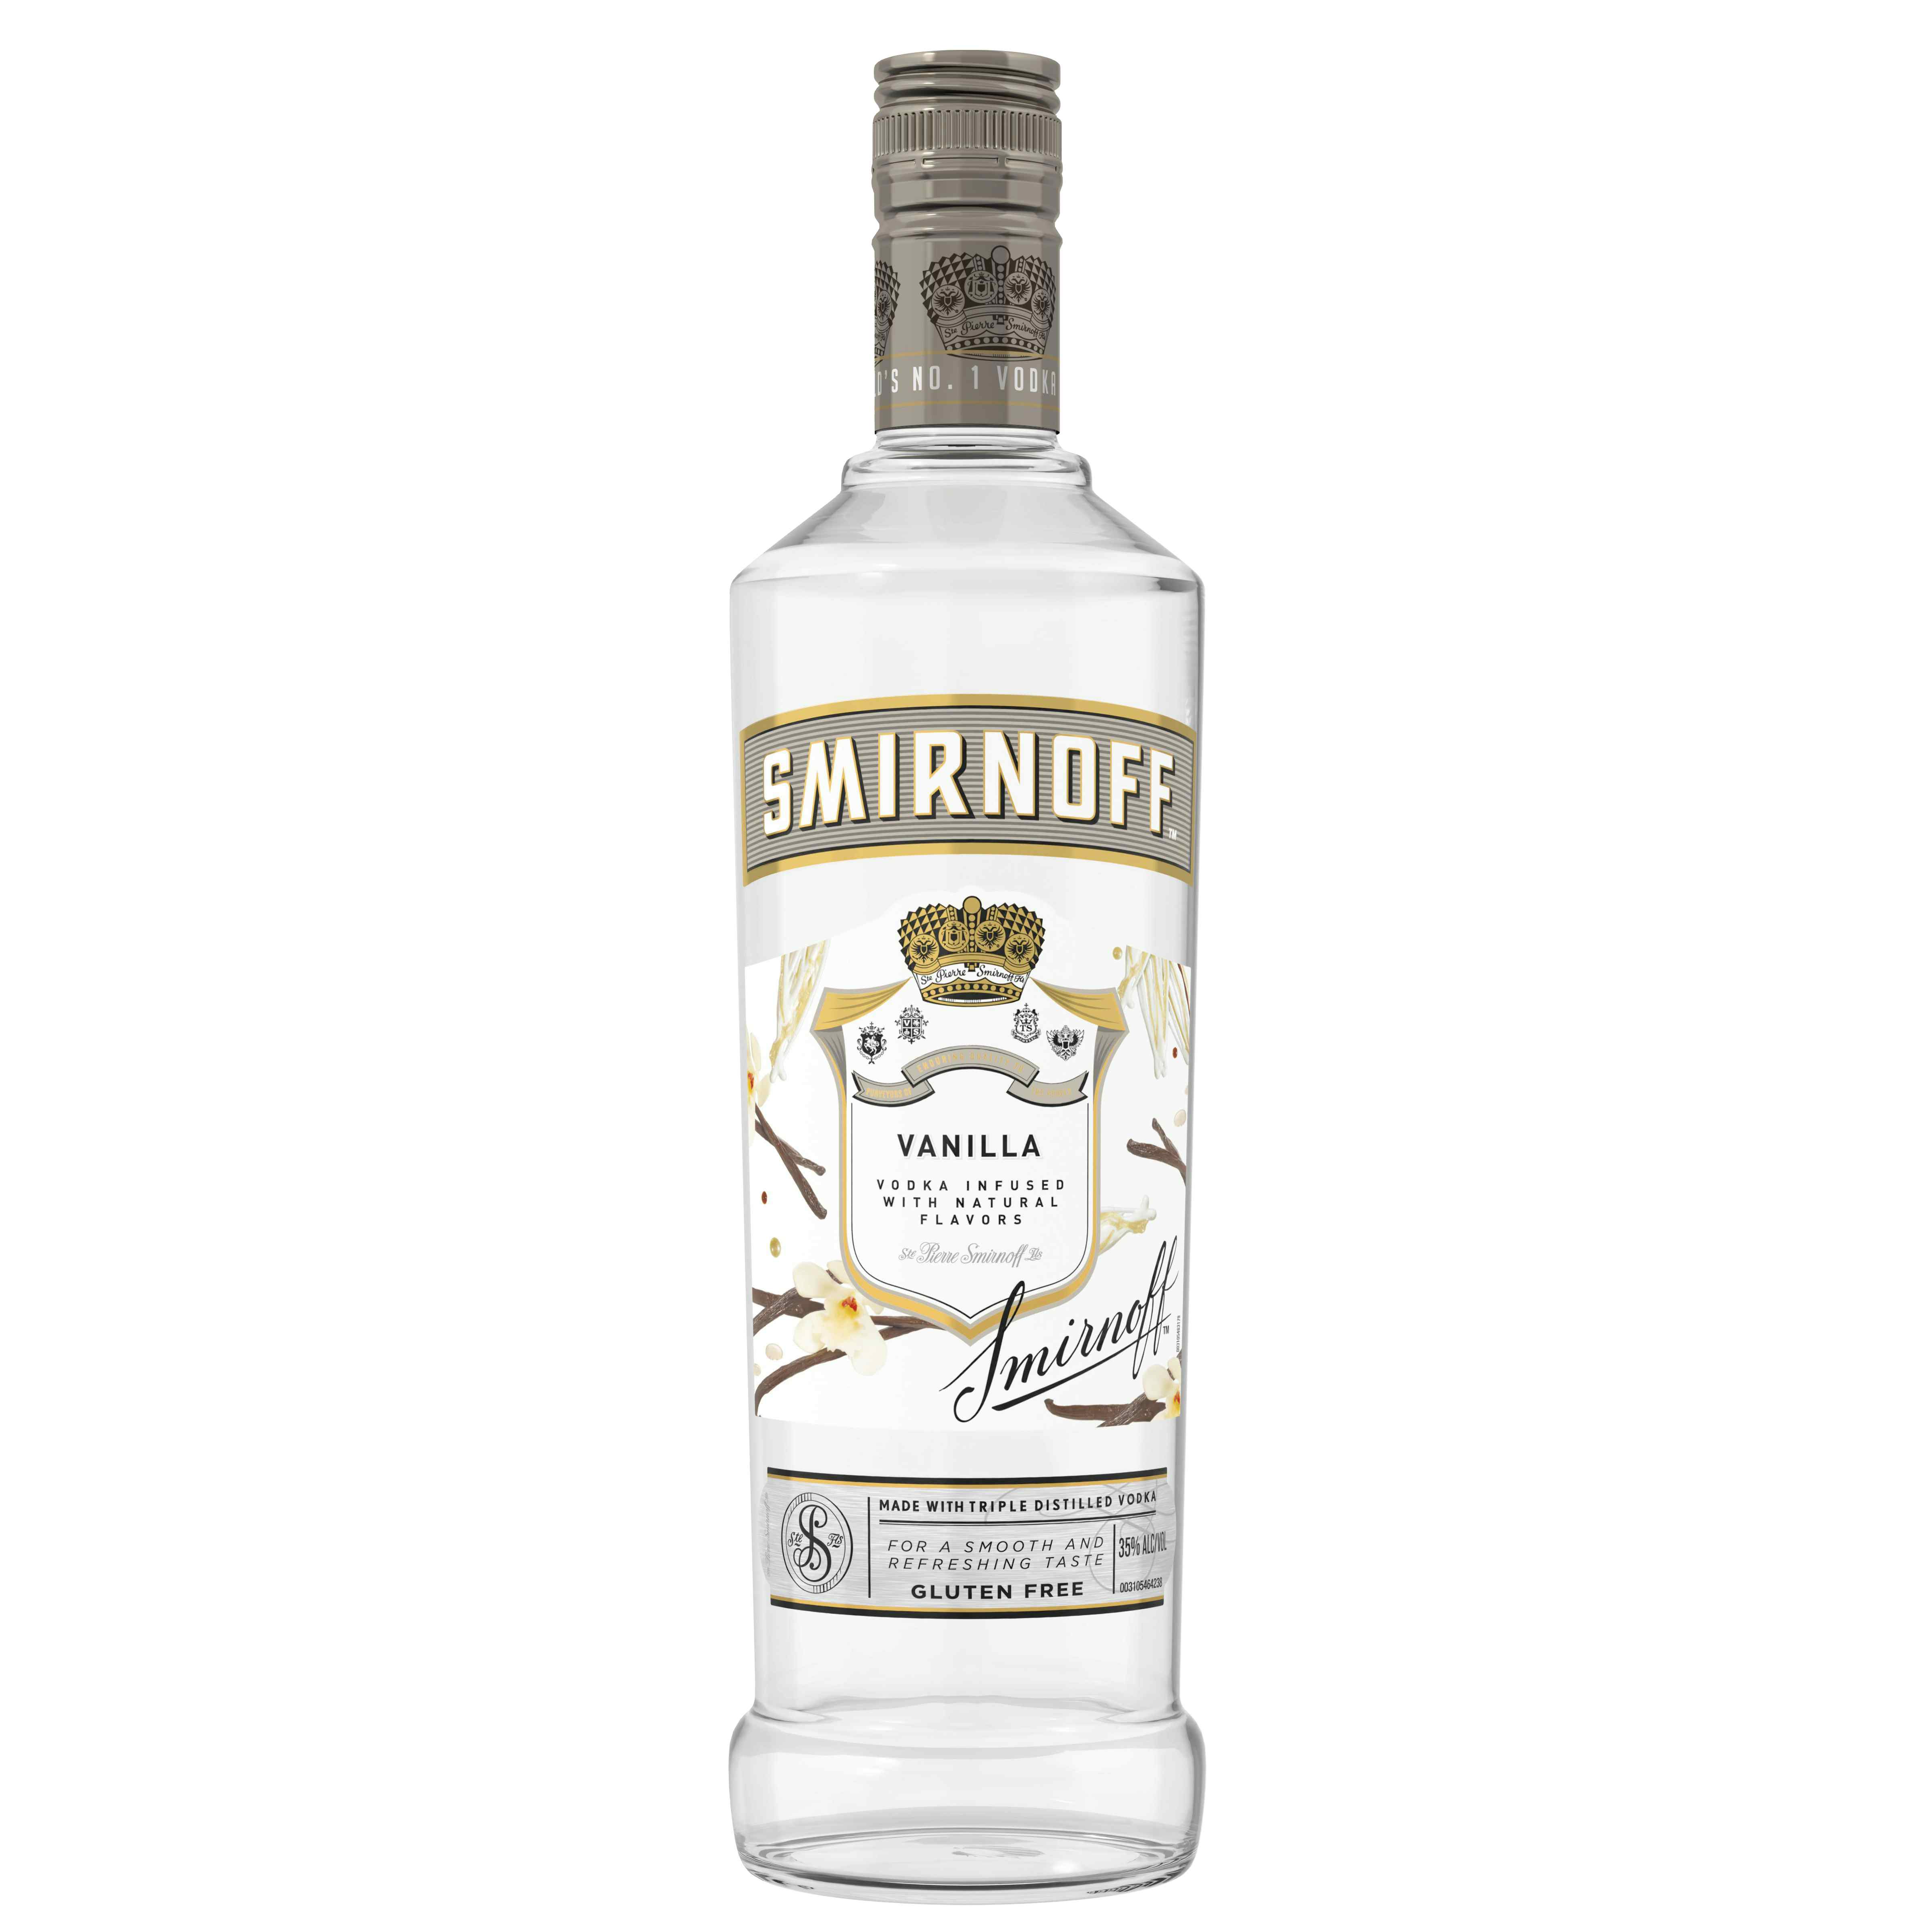 Smirnoff Vodka Alcohol Percentage: Checking the Alcohol Content in Smirnoff Vodka